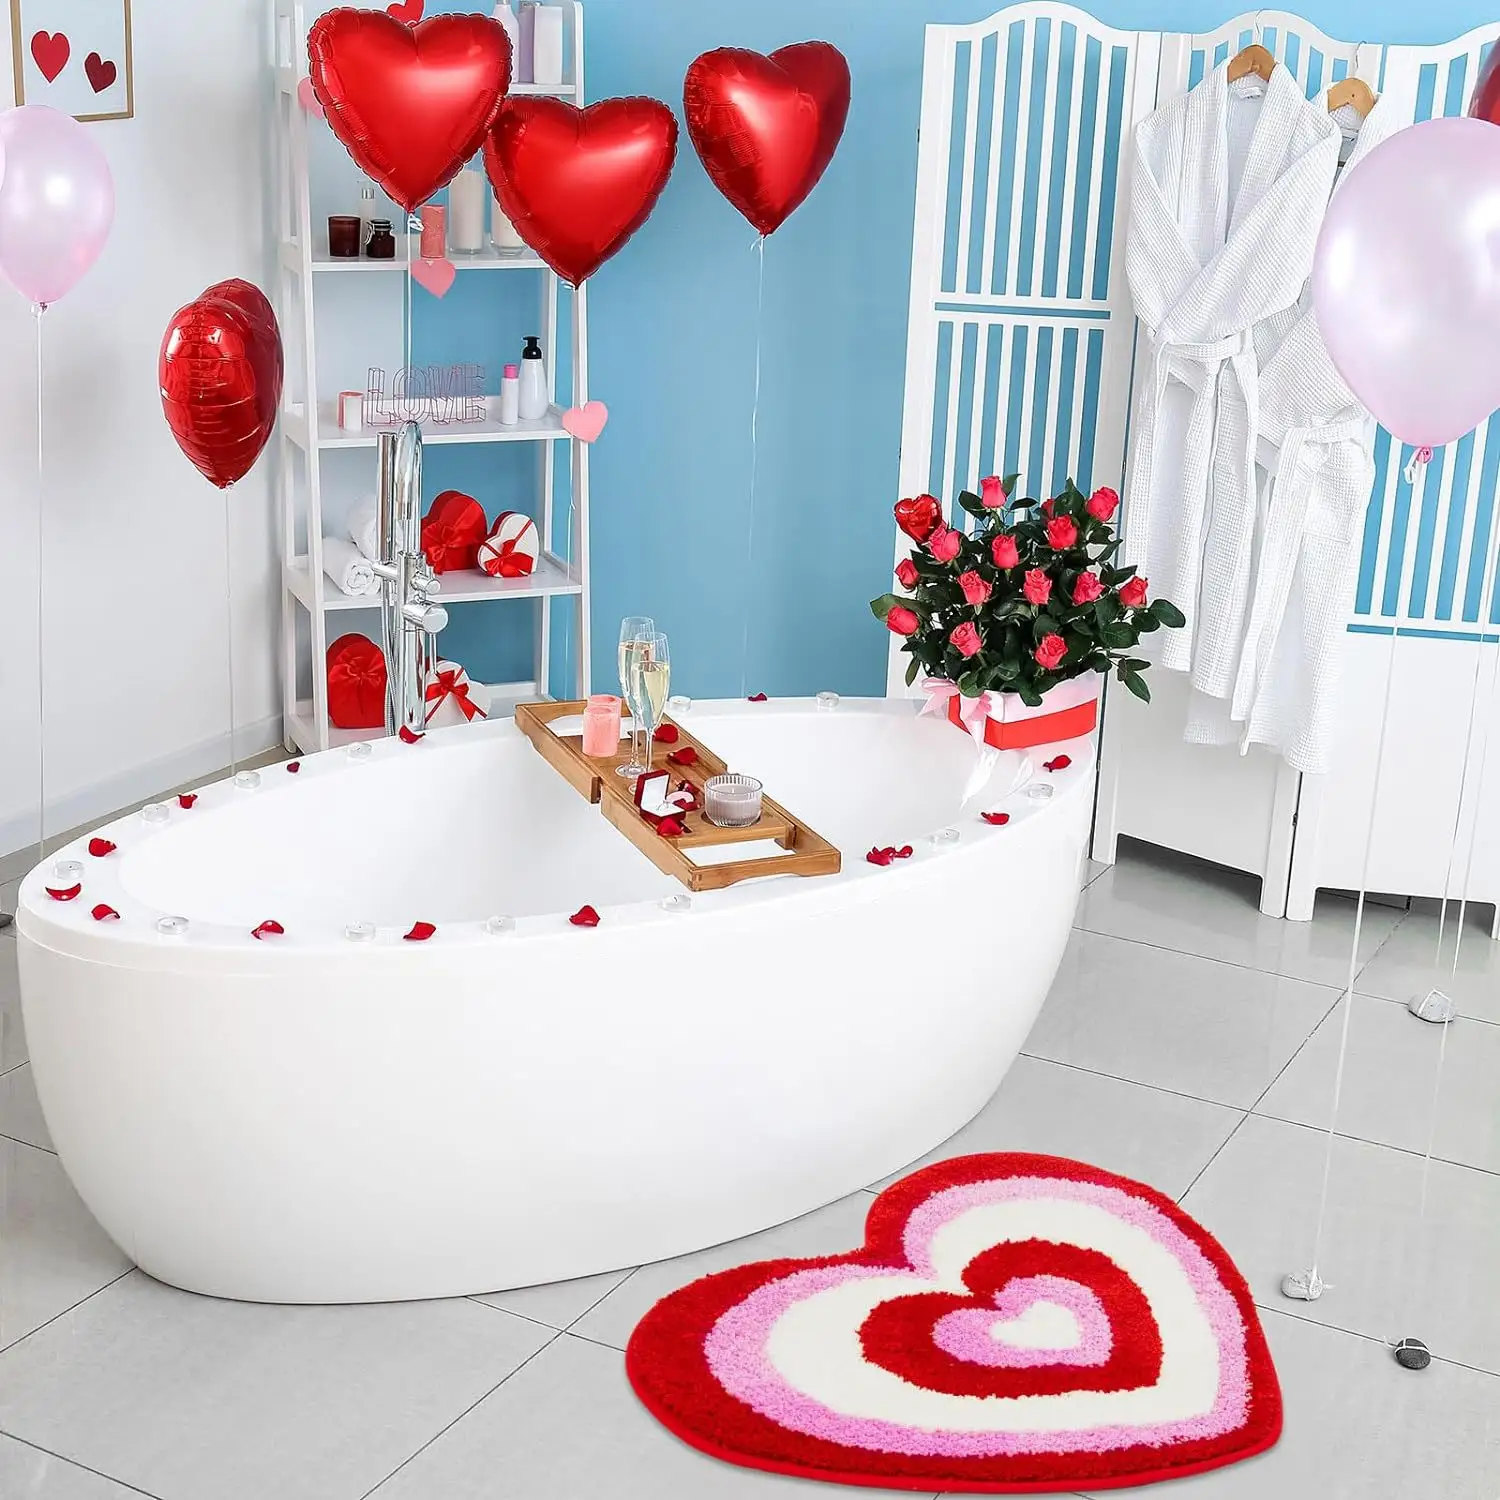 Irini 발렌타인 데이 목욕 매트 심장 터프트 러그 욕실 주방 깔개 미끄럼 방지 바닥 매트